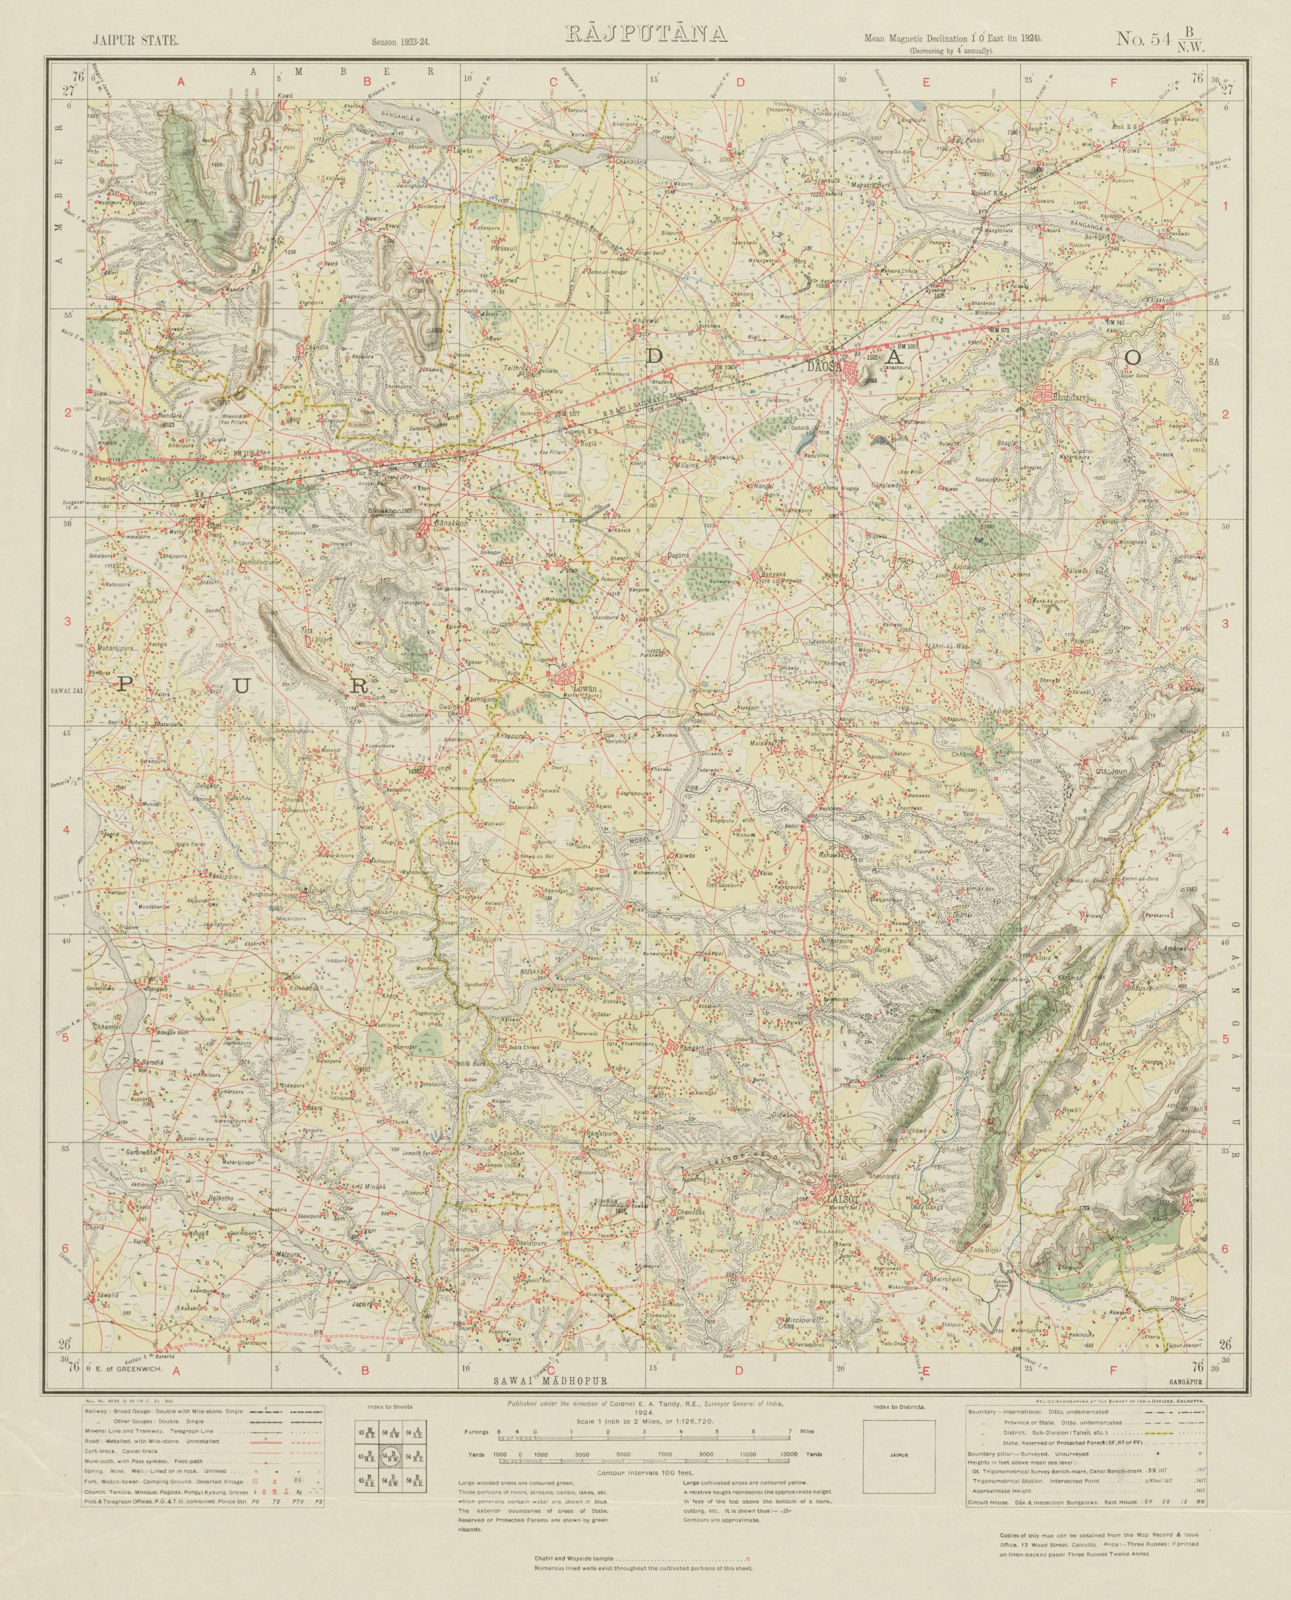 SURVEY OF INDIA 54 B/NW Rajasthan Dausa Lalsot Bassi Bhandrej Lawan 1924 map